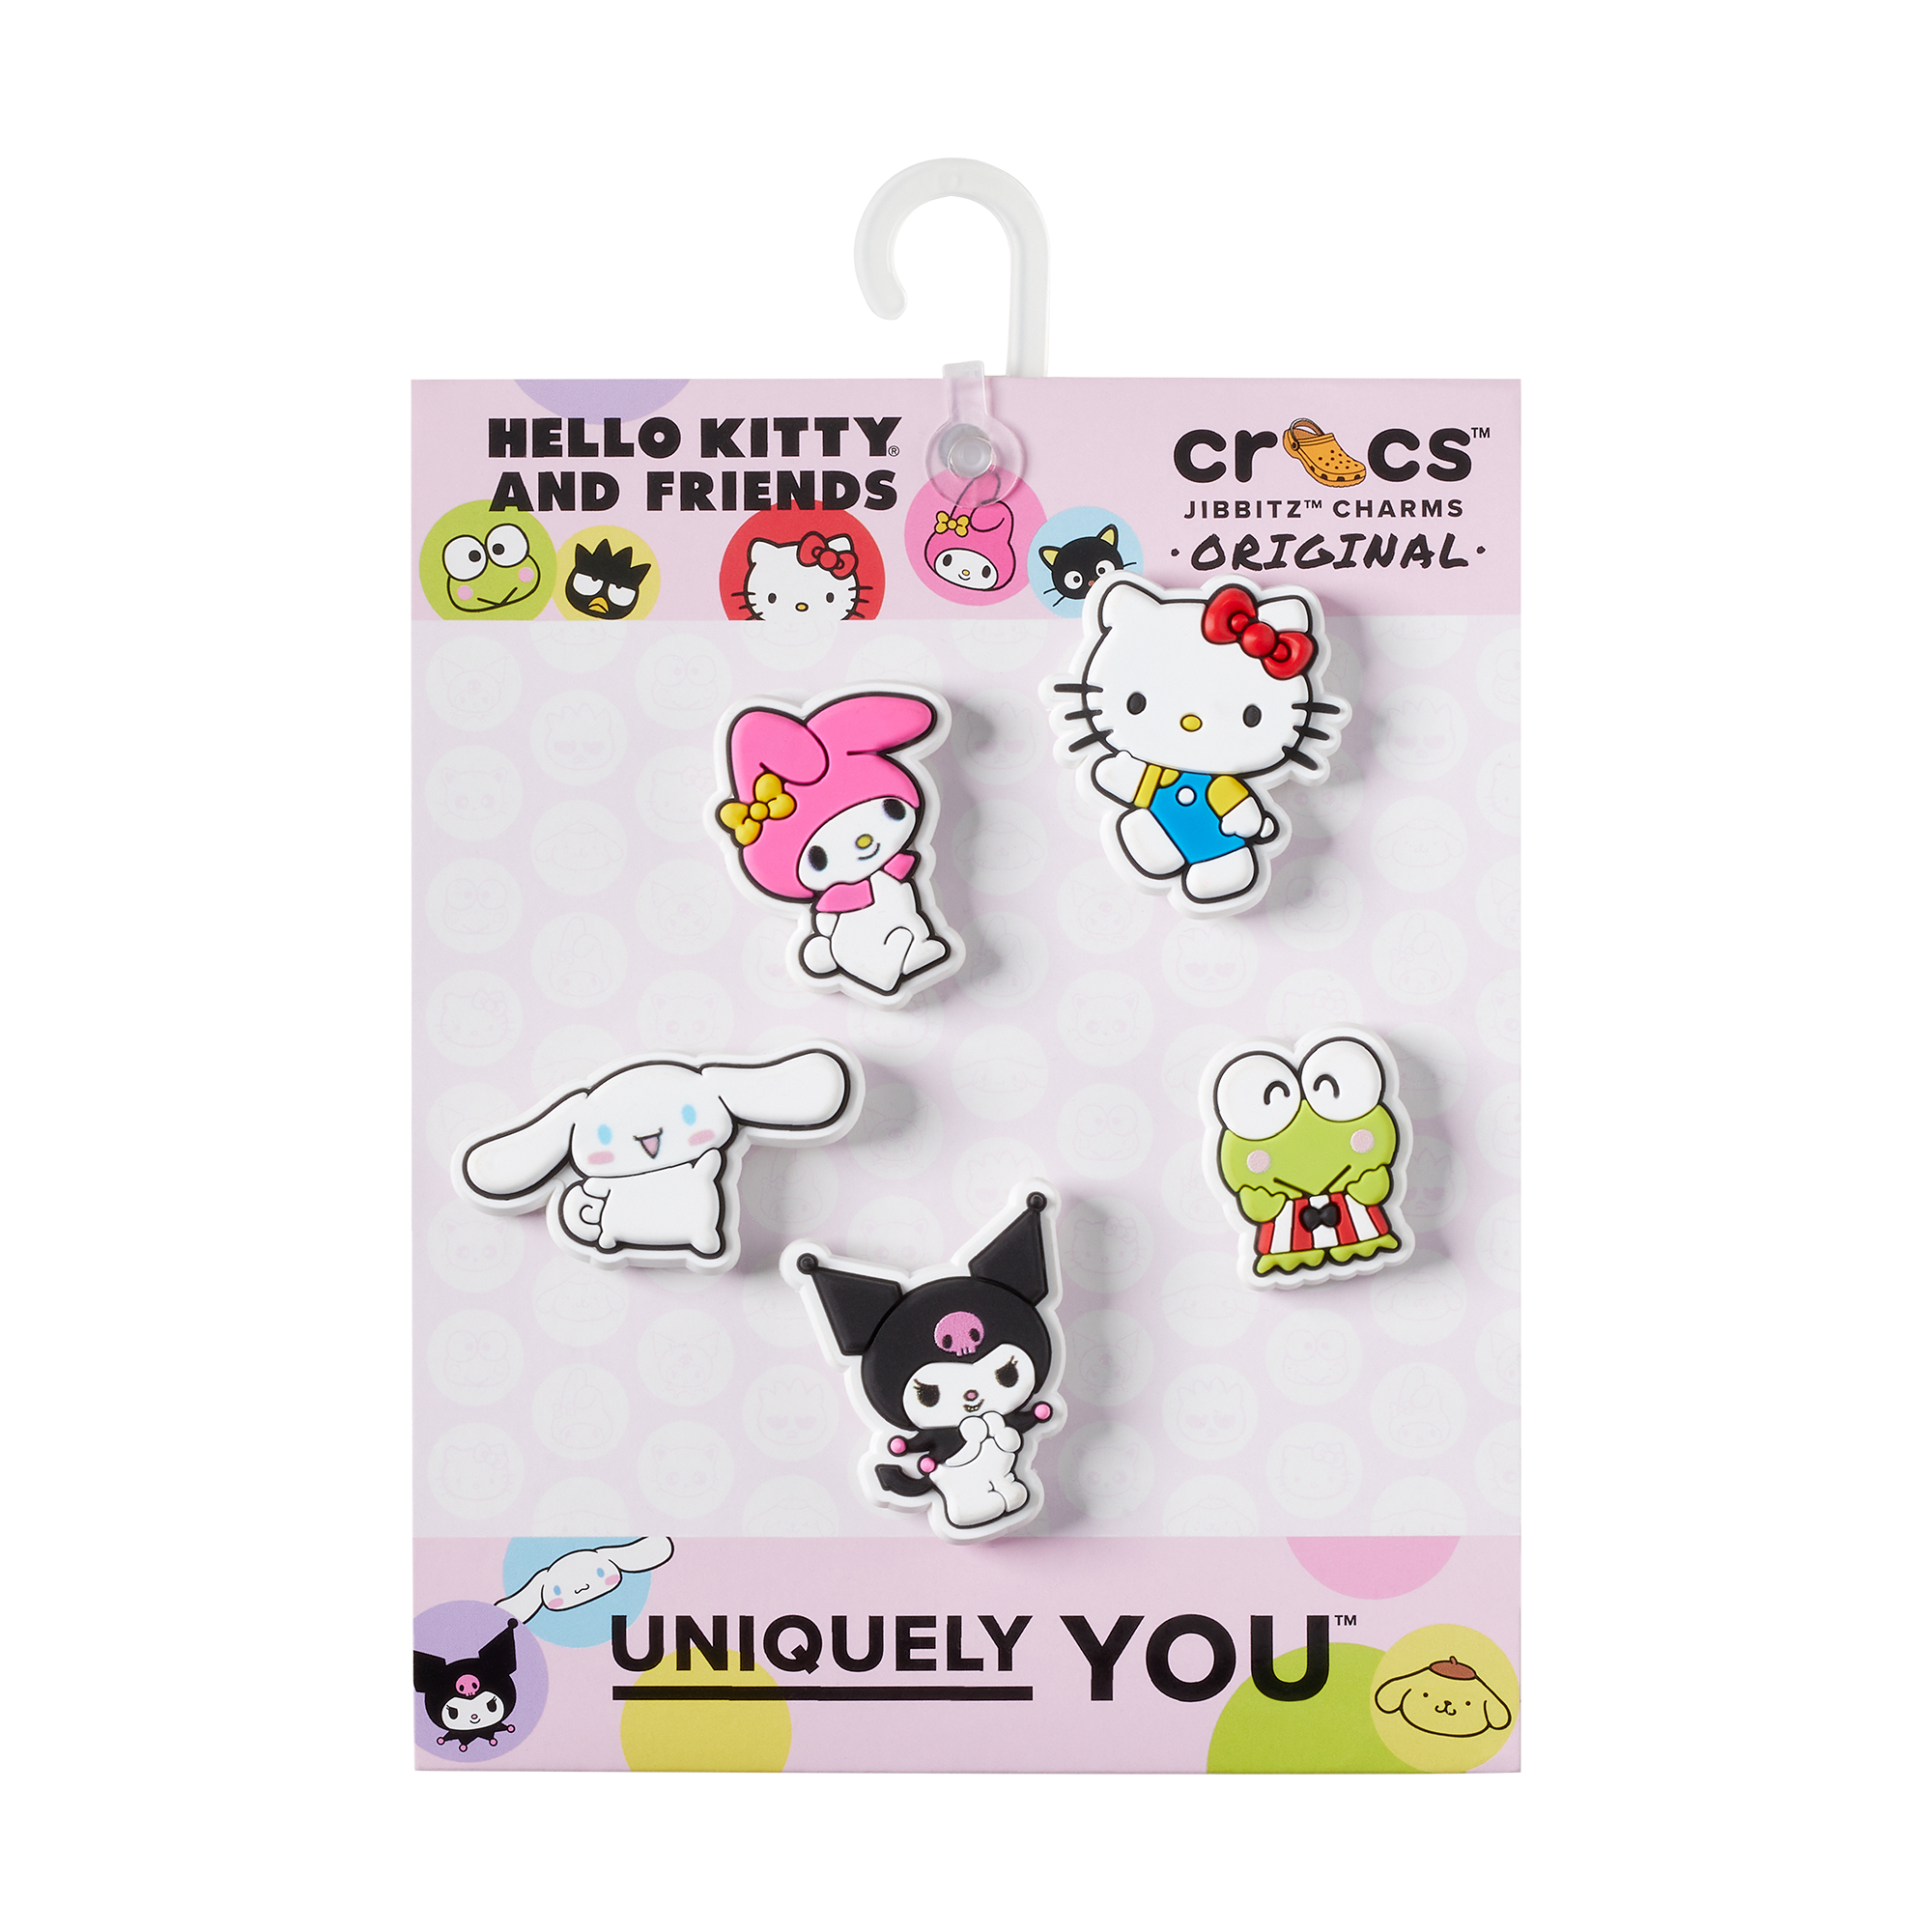 Hello Kitty and Friends x Crocs Classic Jibbitz™ Charms 5-Pack Accessory Crocs   